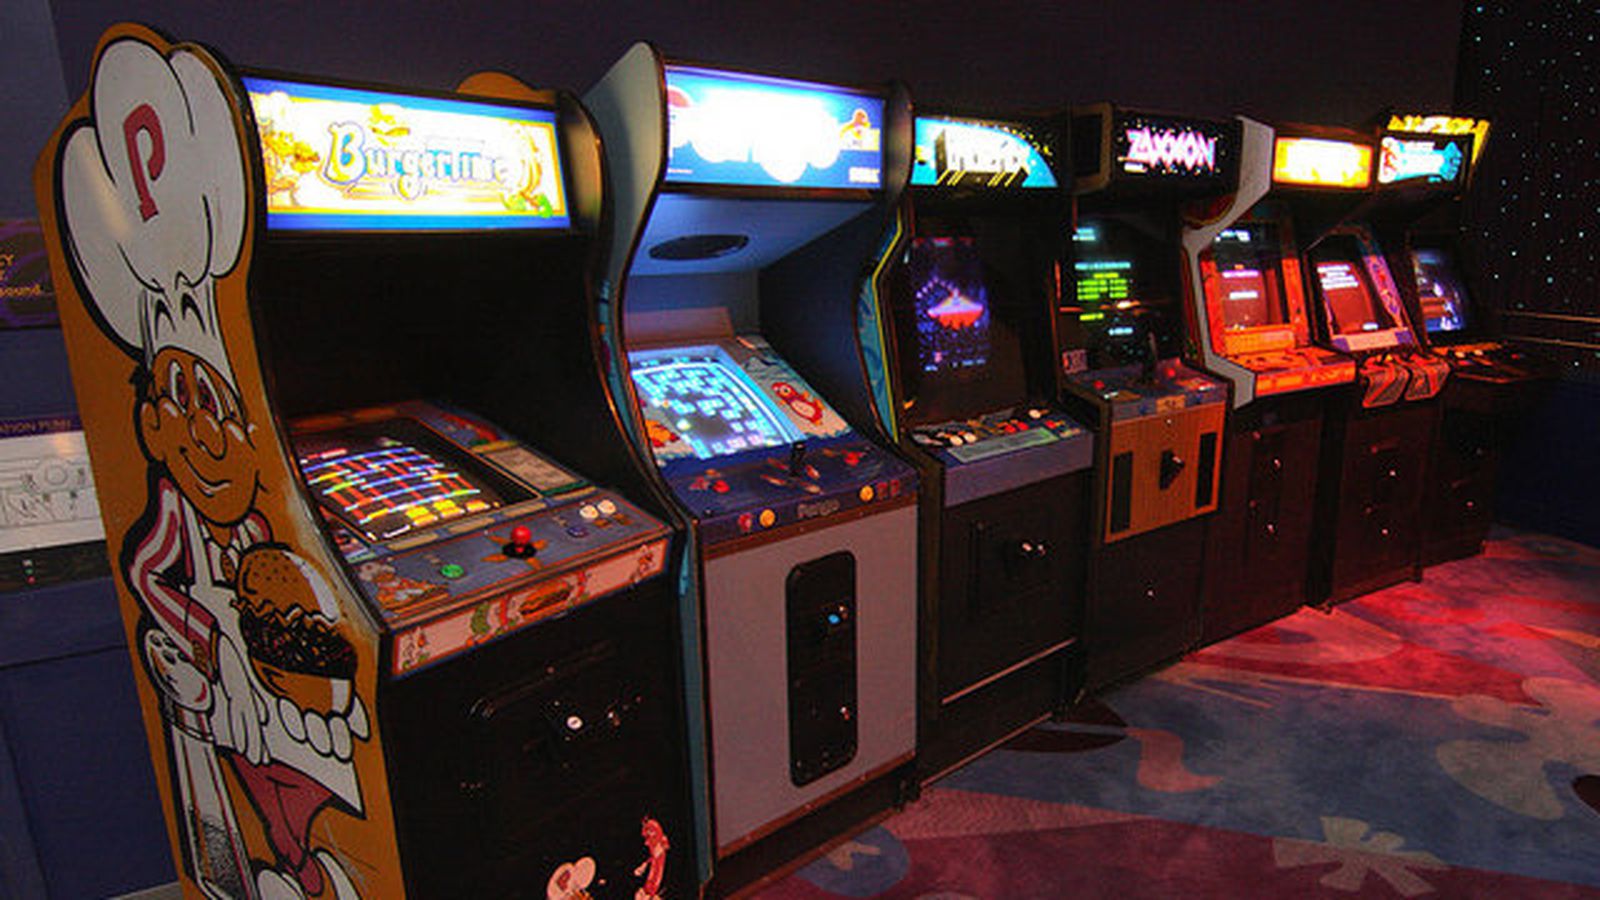 What on earth игровой автомат эльдорадо казино онлайн официальный сайт россия